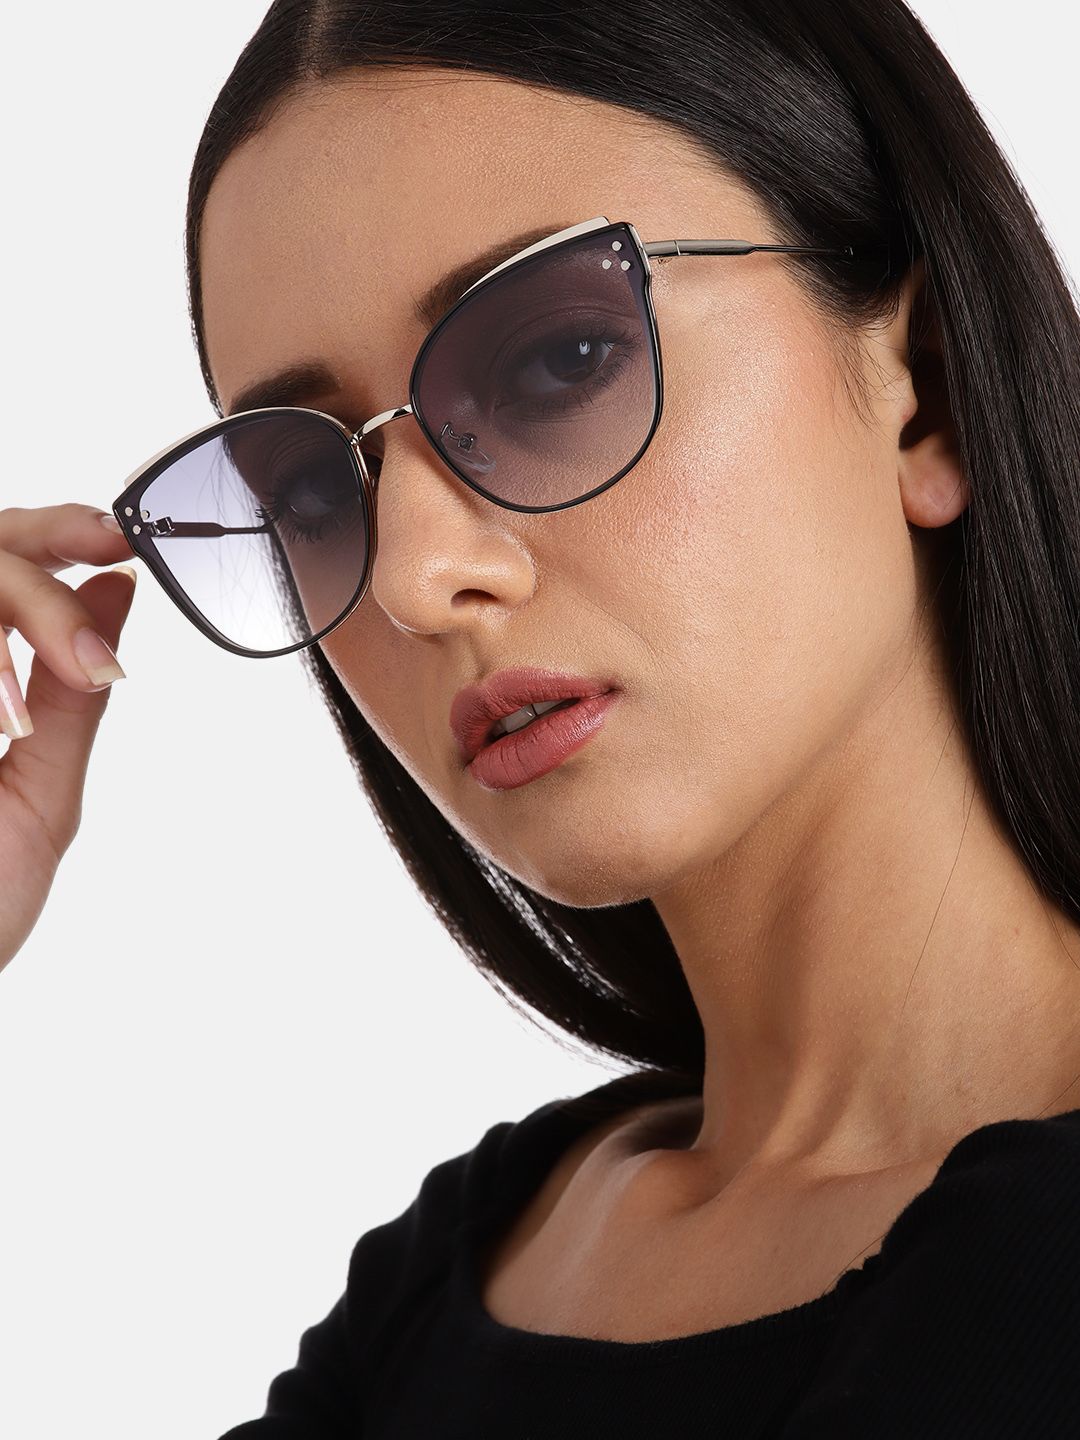 Voyage Women Cateye Sunglasses 5852MG2855 Price in India